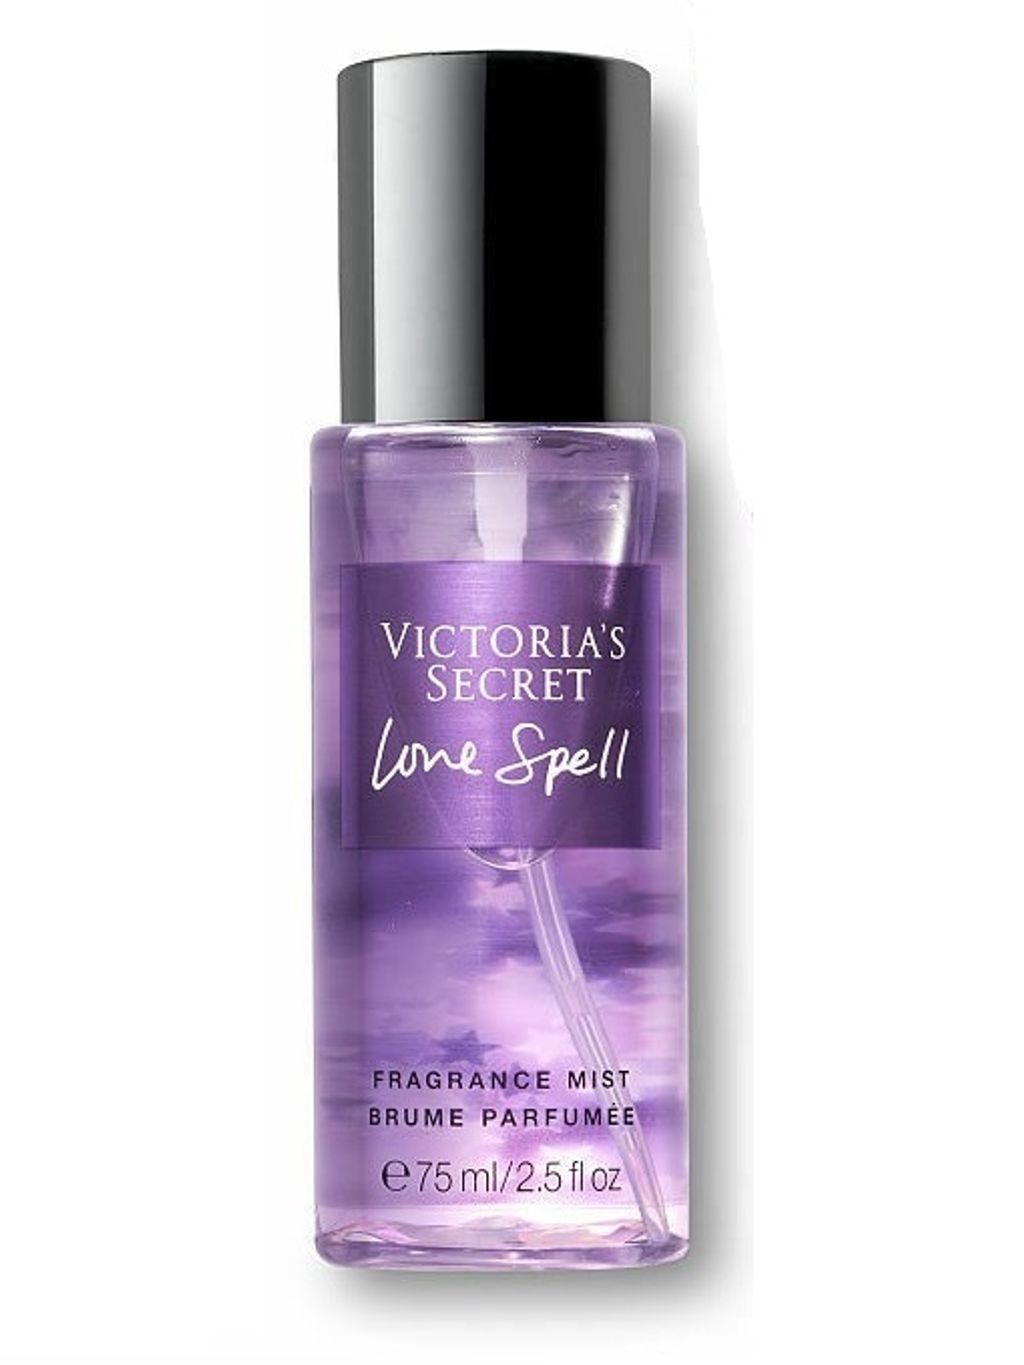 Victoria's Secret Mini Fragrance Mist 75ml - Coconut Passion – Beautyspot